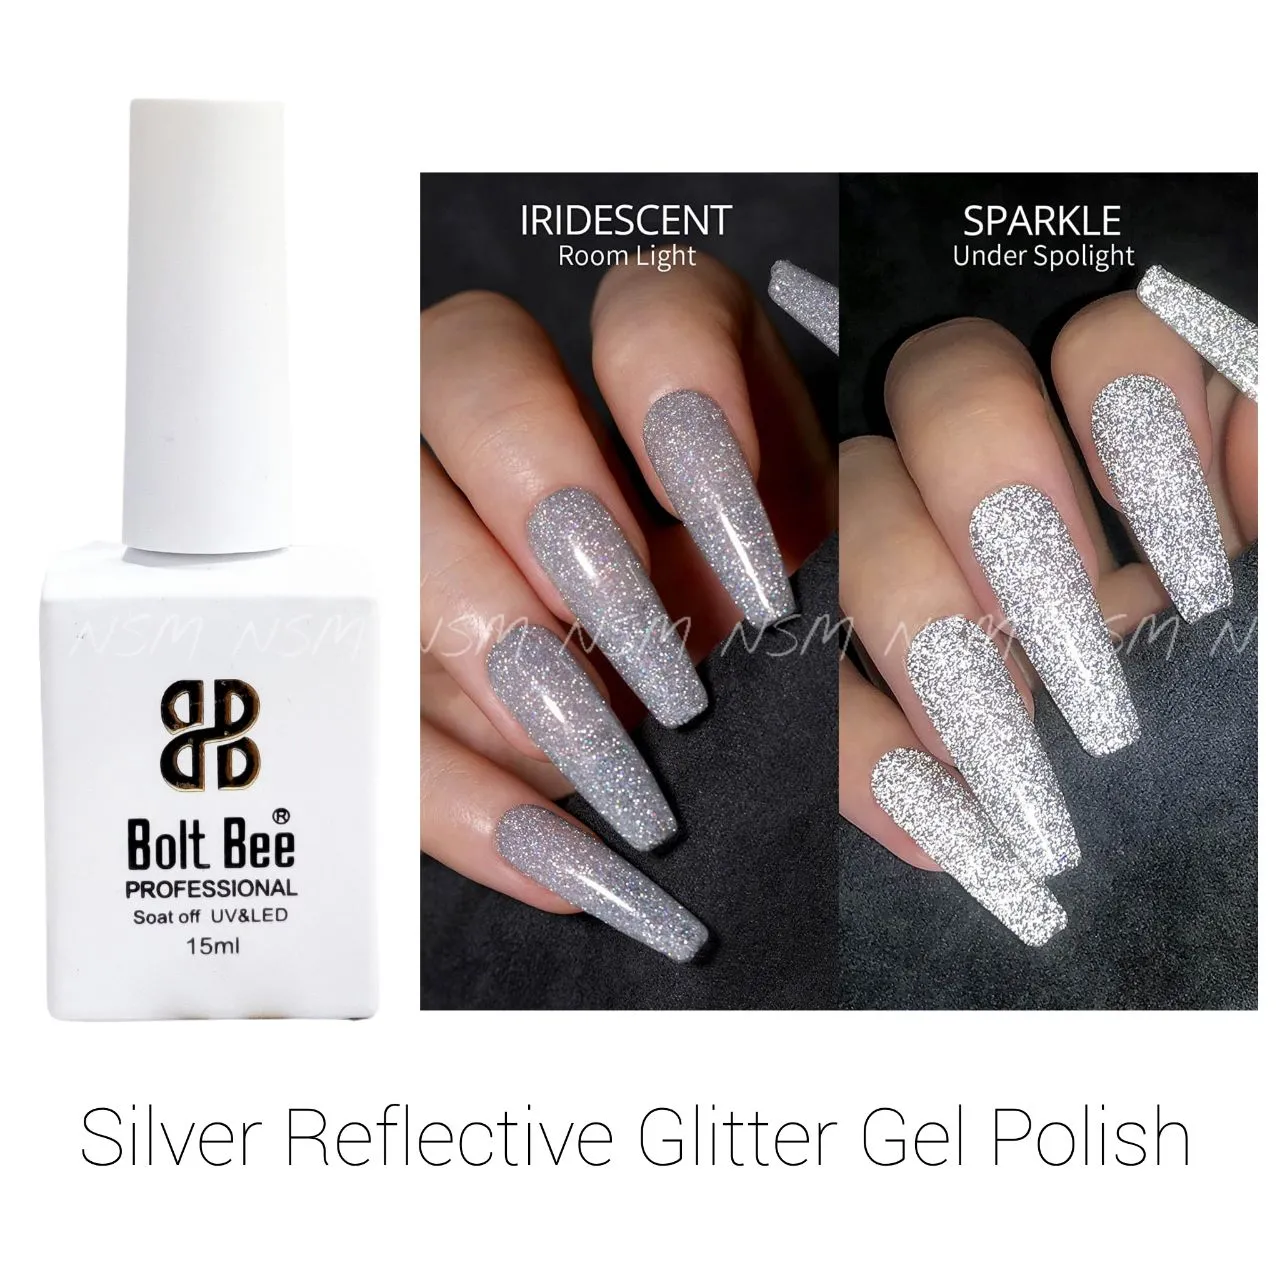 Glitter Gel Manicure/Pedicure | Toe nails, Glitter toe nails, Gel nails